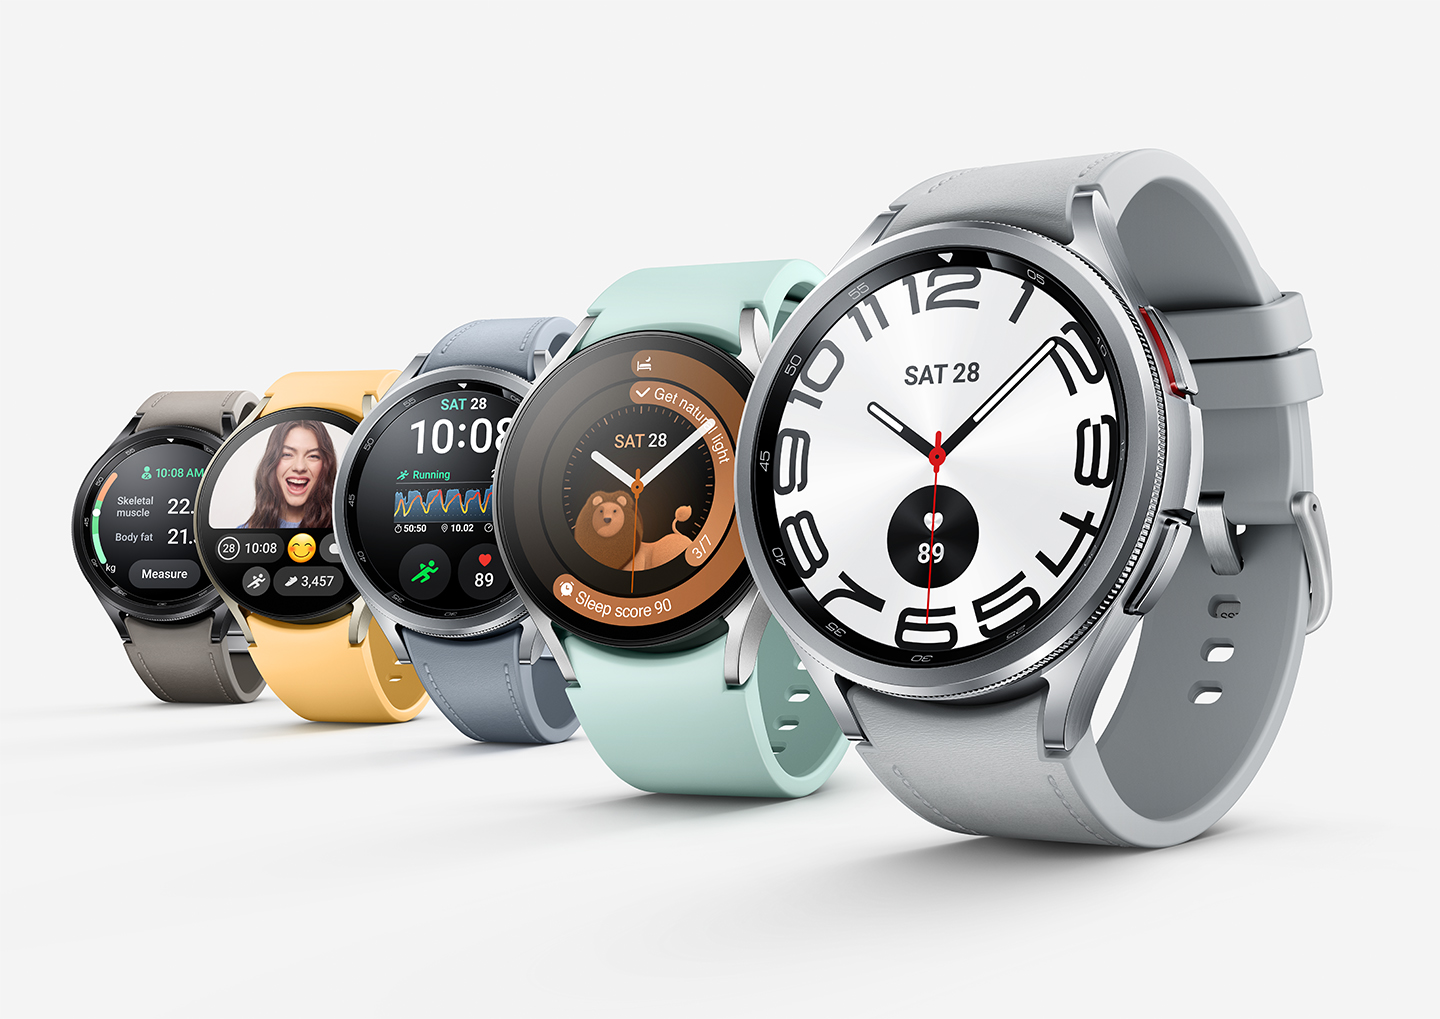 Proprio come Apple: Samsung rilascerà gli smartwatch Galaxy Watch Ultra e Galaxy Watch FE